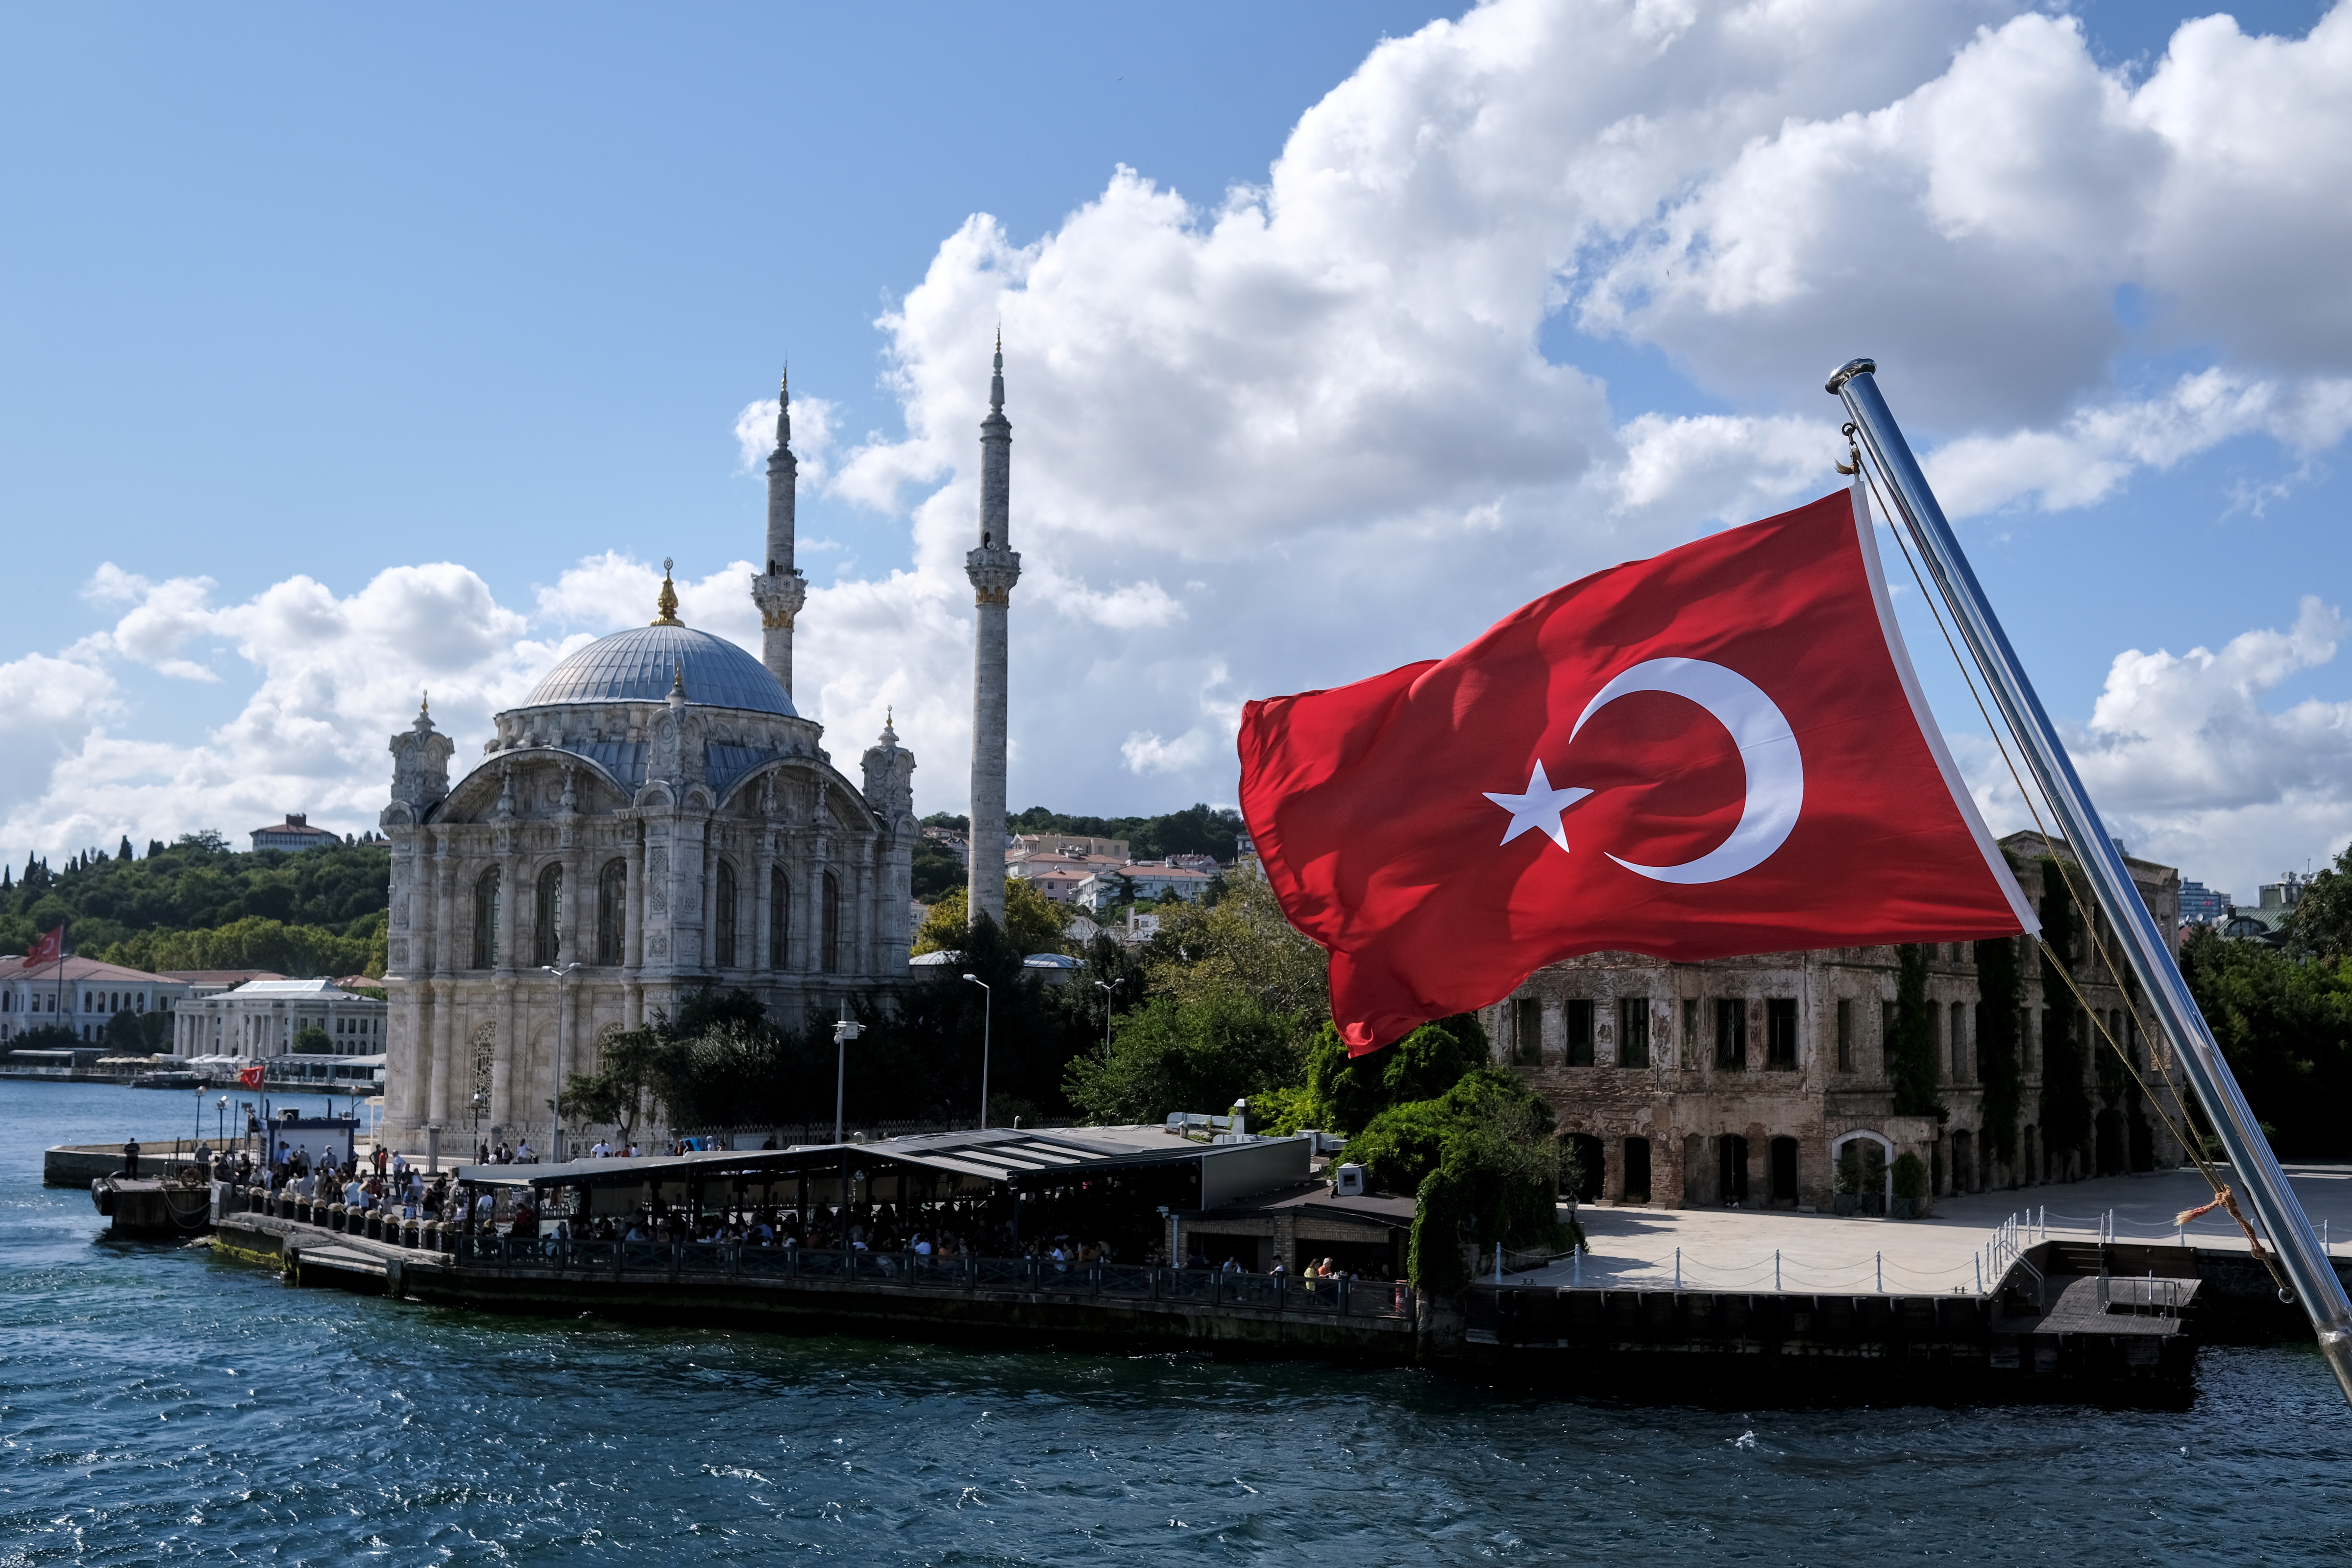 Культурные центры турции. Истанбул Турция. Ortakoy Стамбул. Турция Султанахмет флаг. Район Ортакей в Стамбуле.